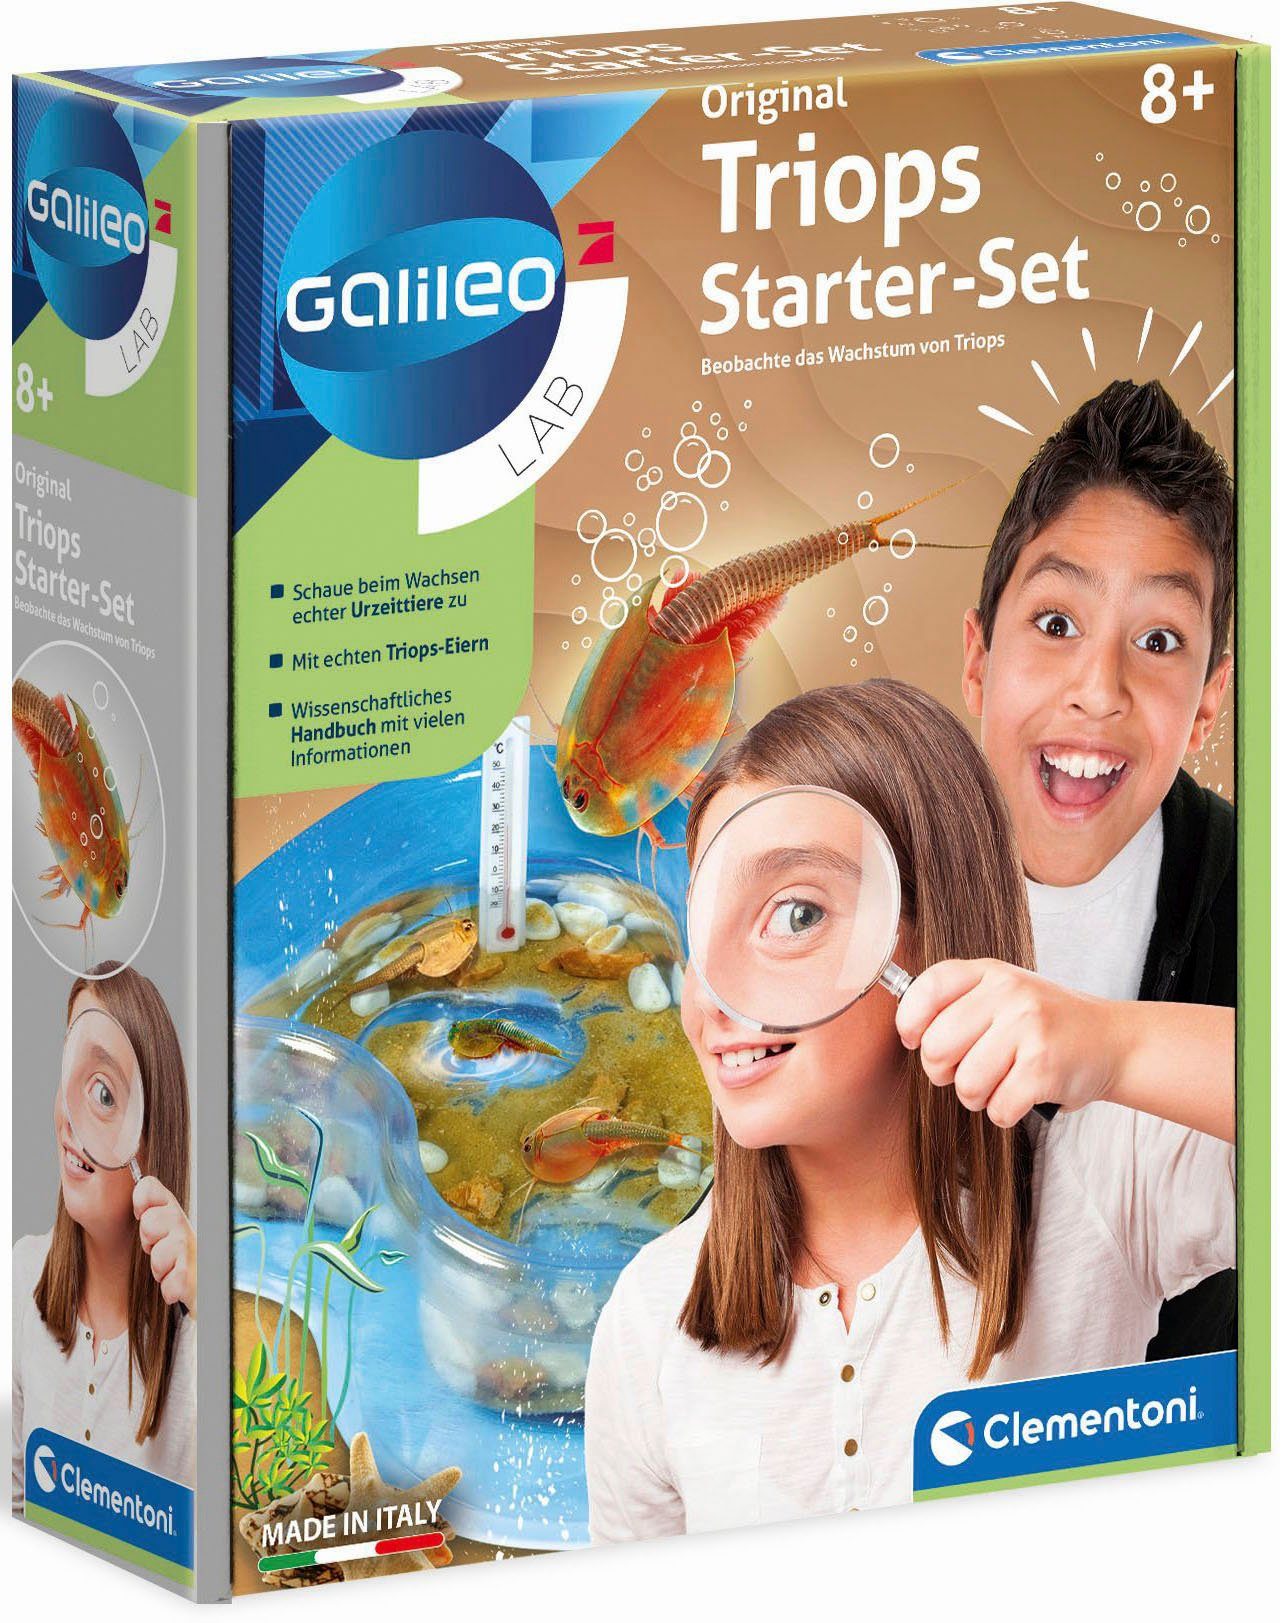 Clementoni® Experimentierkasten Galileo, Original Triops Starter-Set, Made in Europe